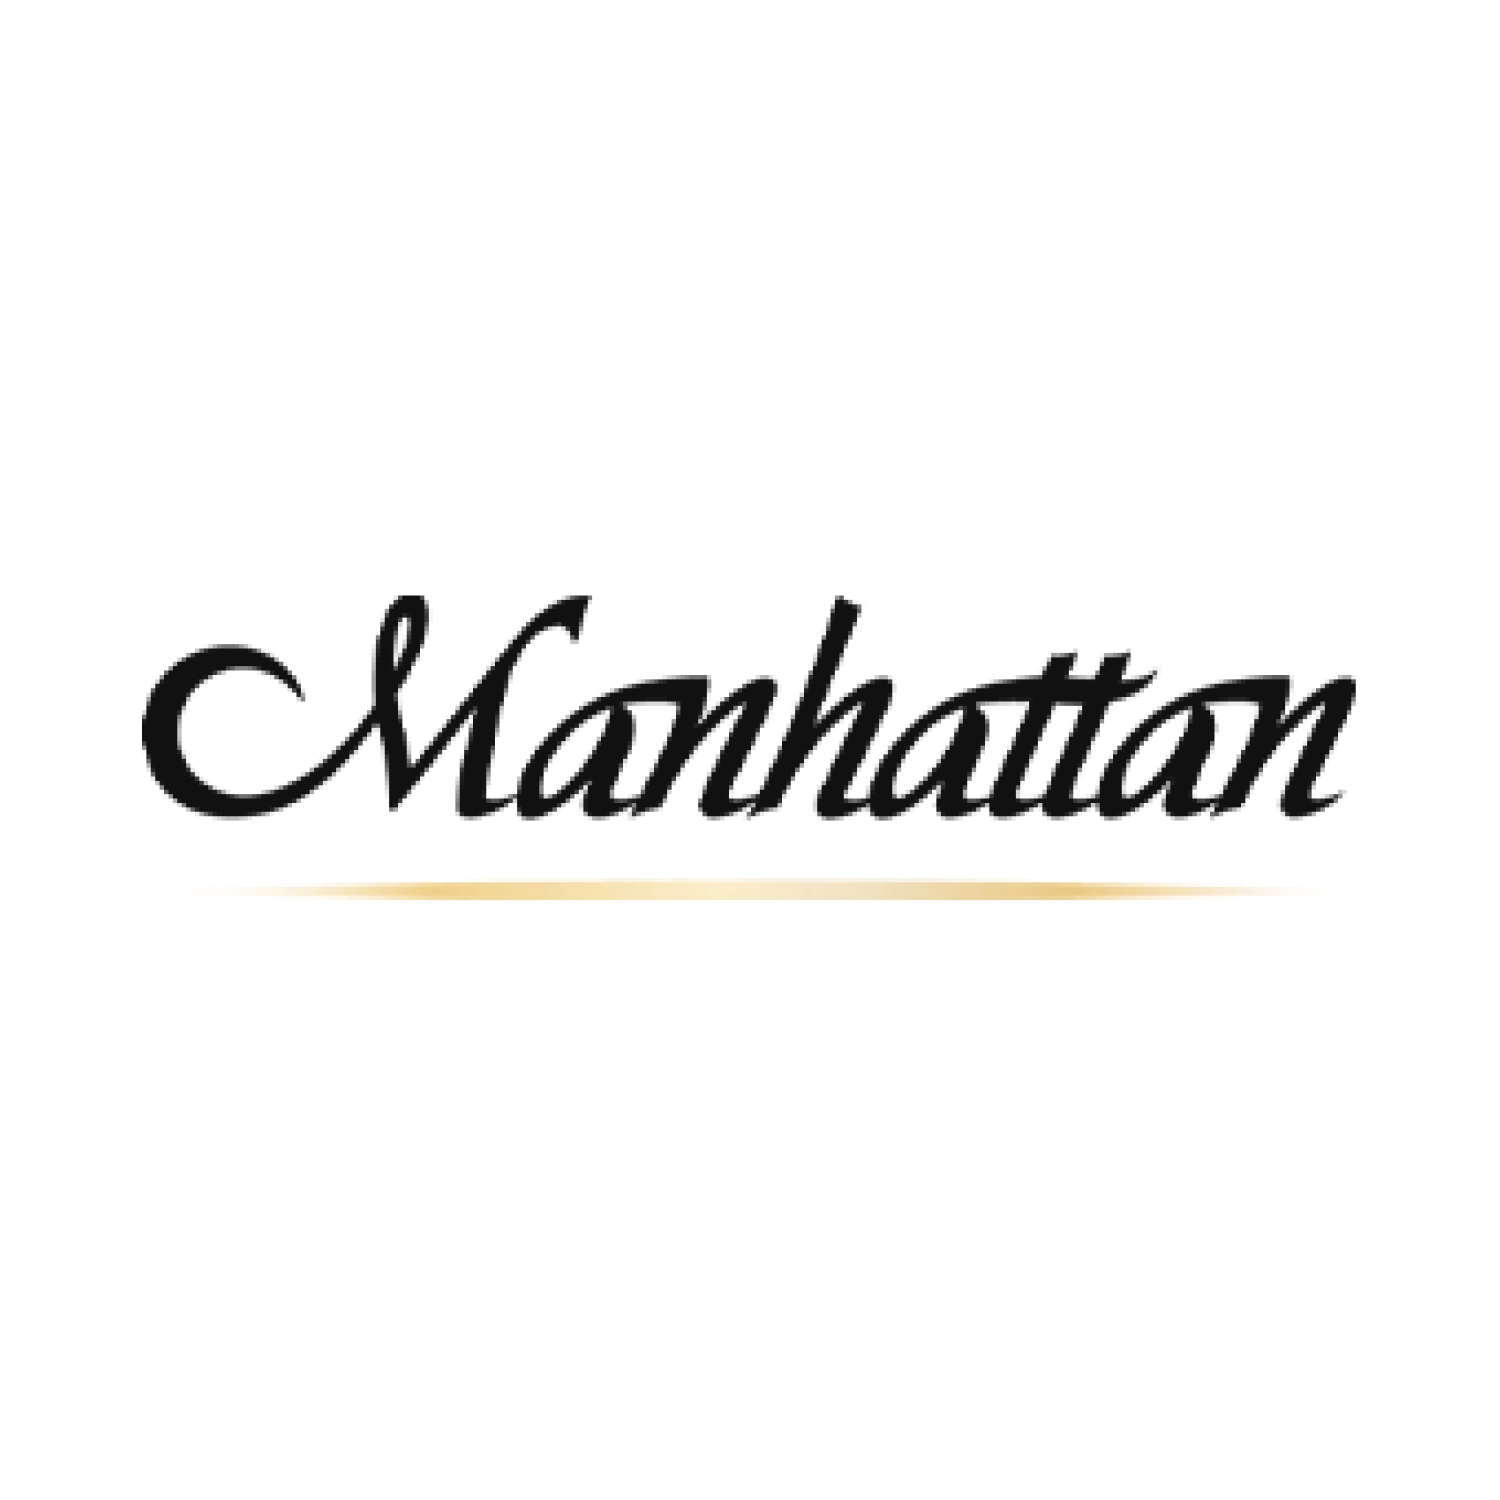 Manhattan casino logo rotund 1500x1500 alb